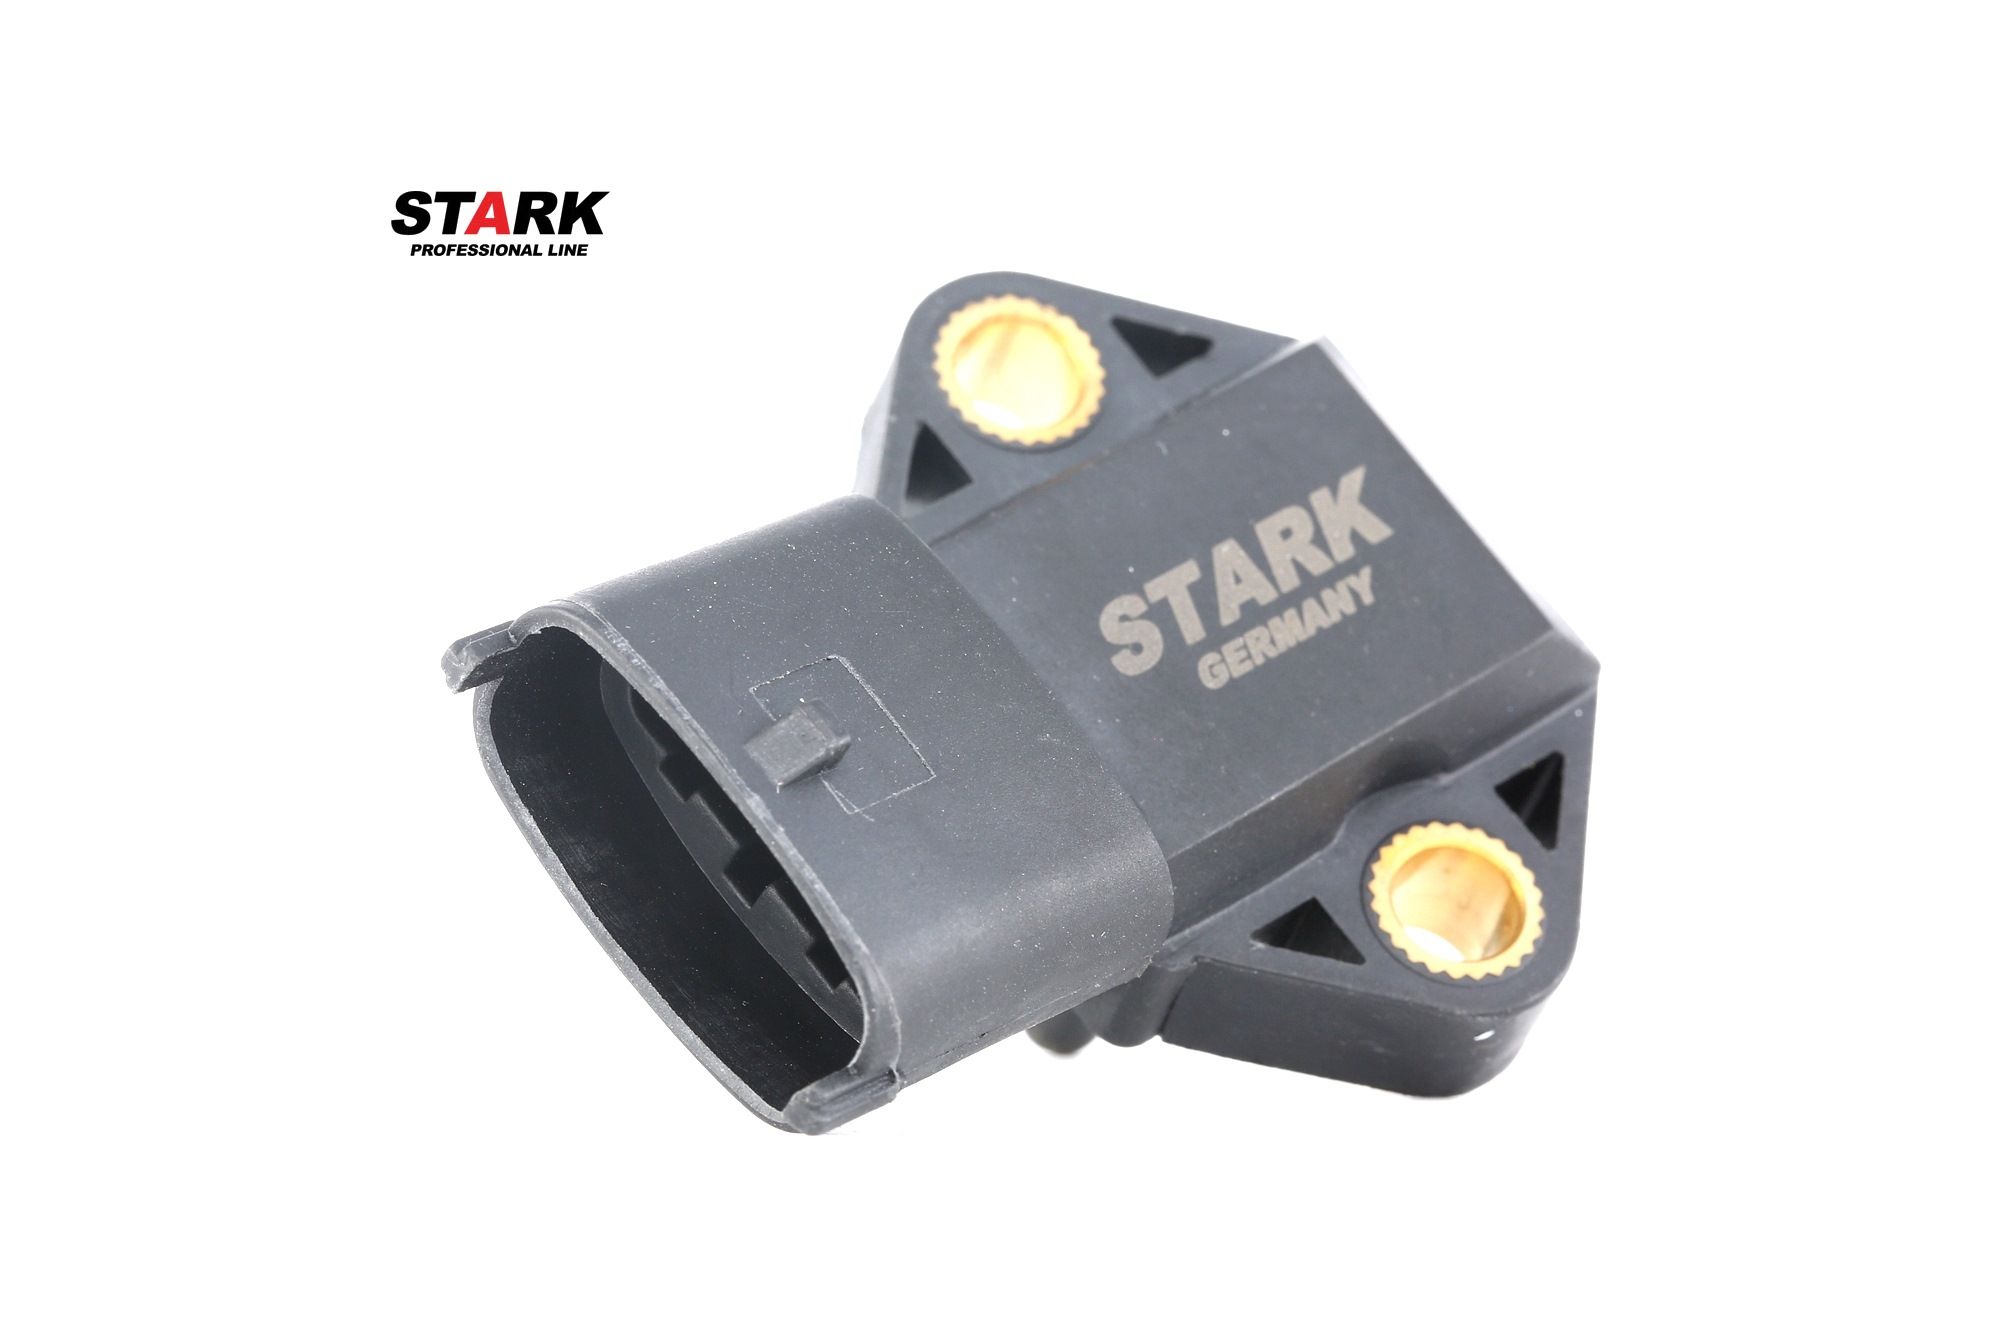 SKBPS-0390021 STARK mit integriertem Lufttemperatursensor Pol-Anzahl: 4-polig Sensor, Ladedruck SKBPS-0390021 günstig kaufen